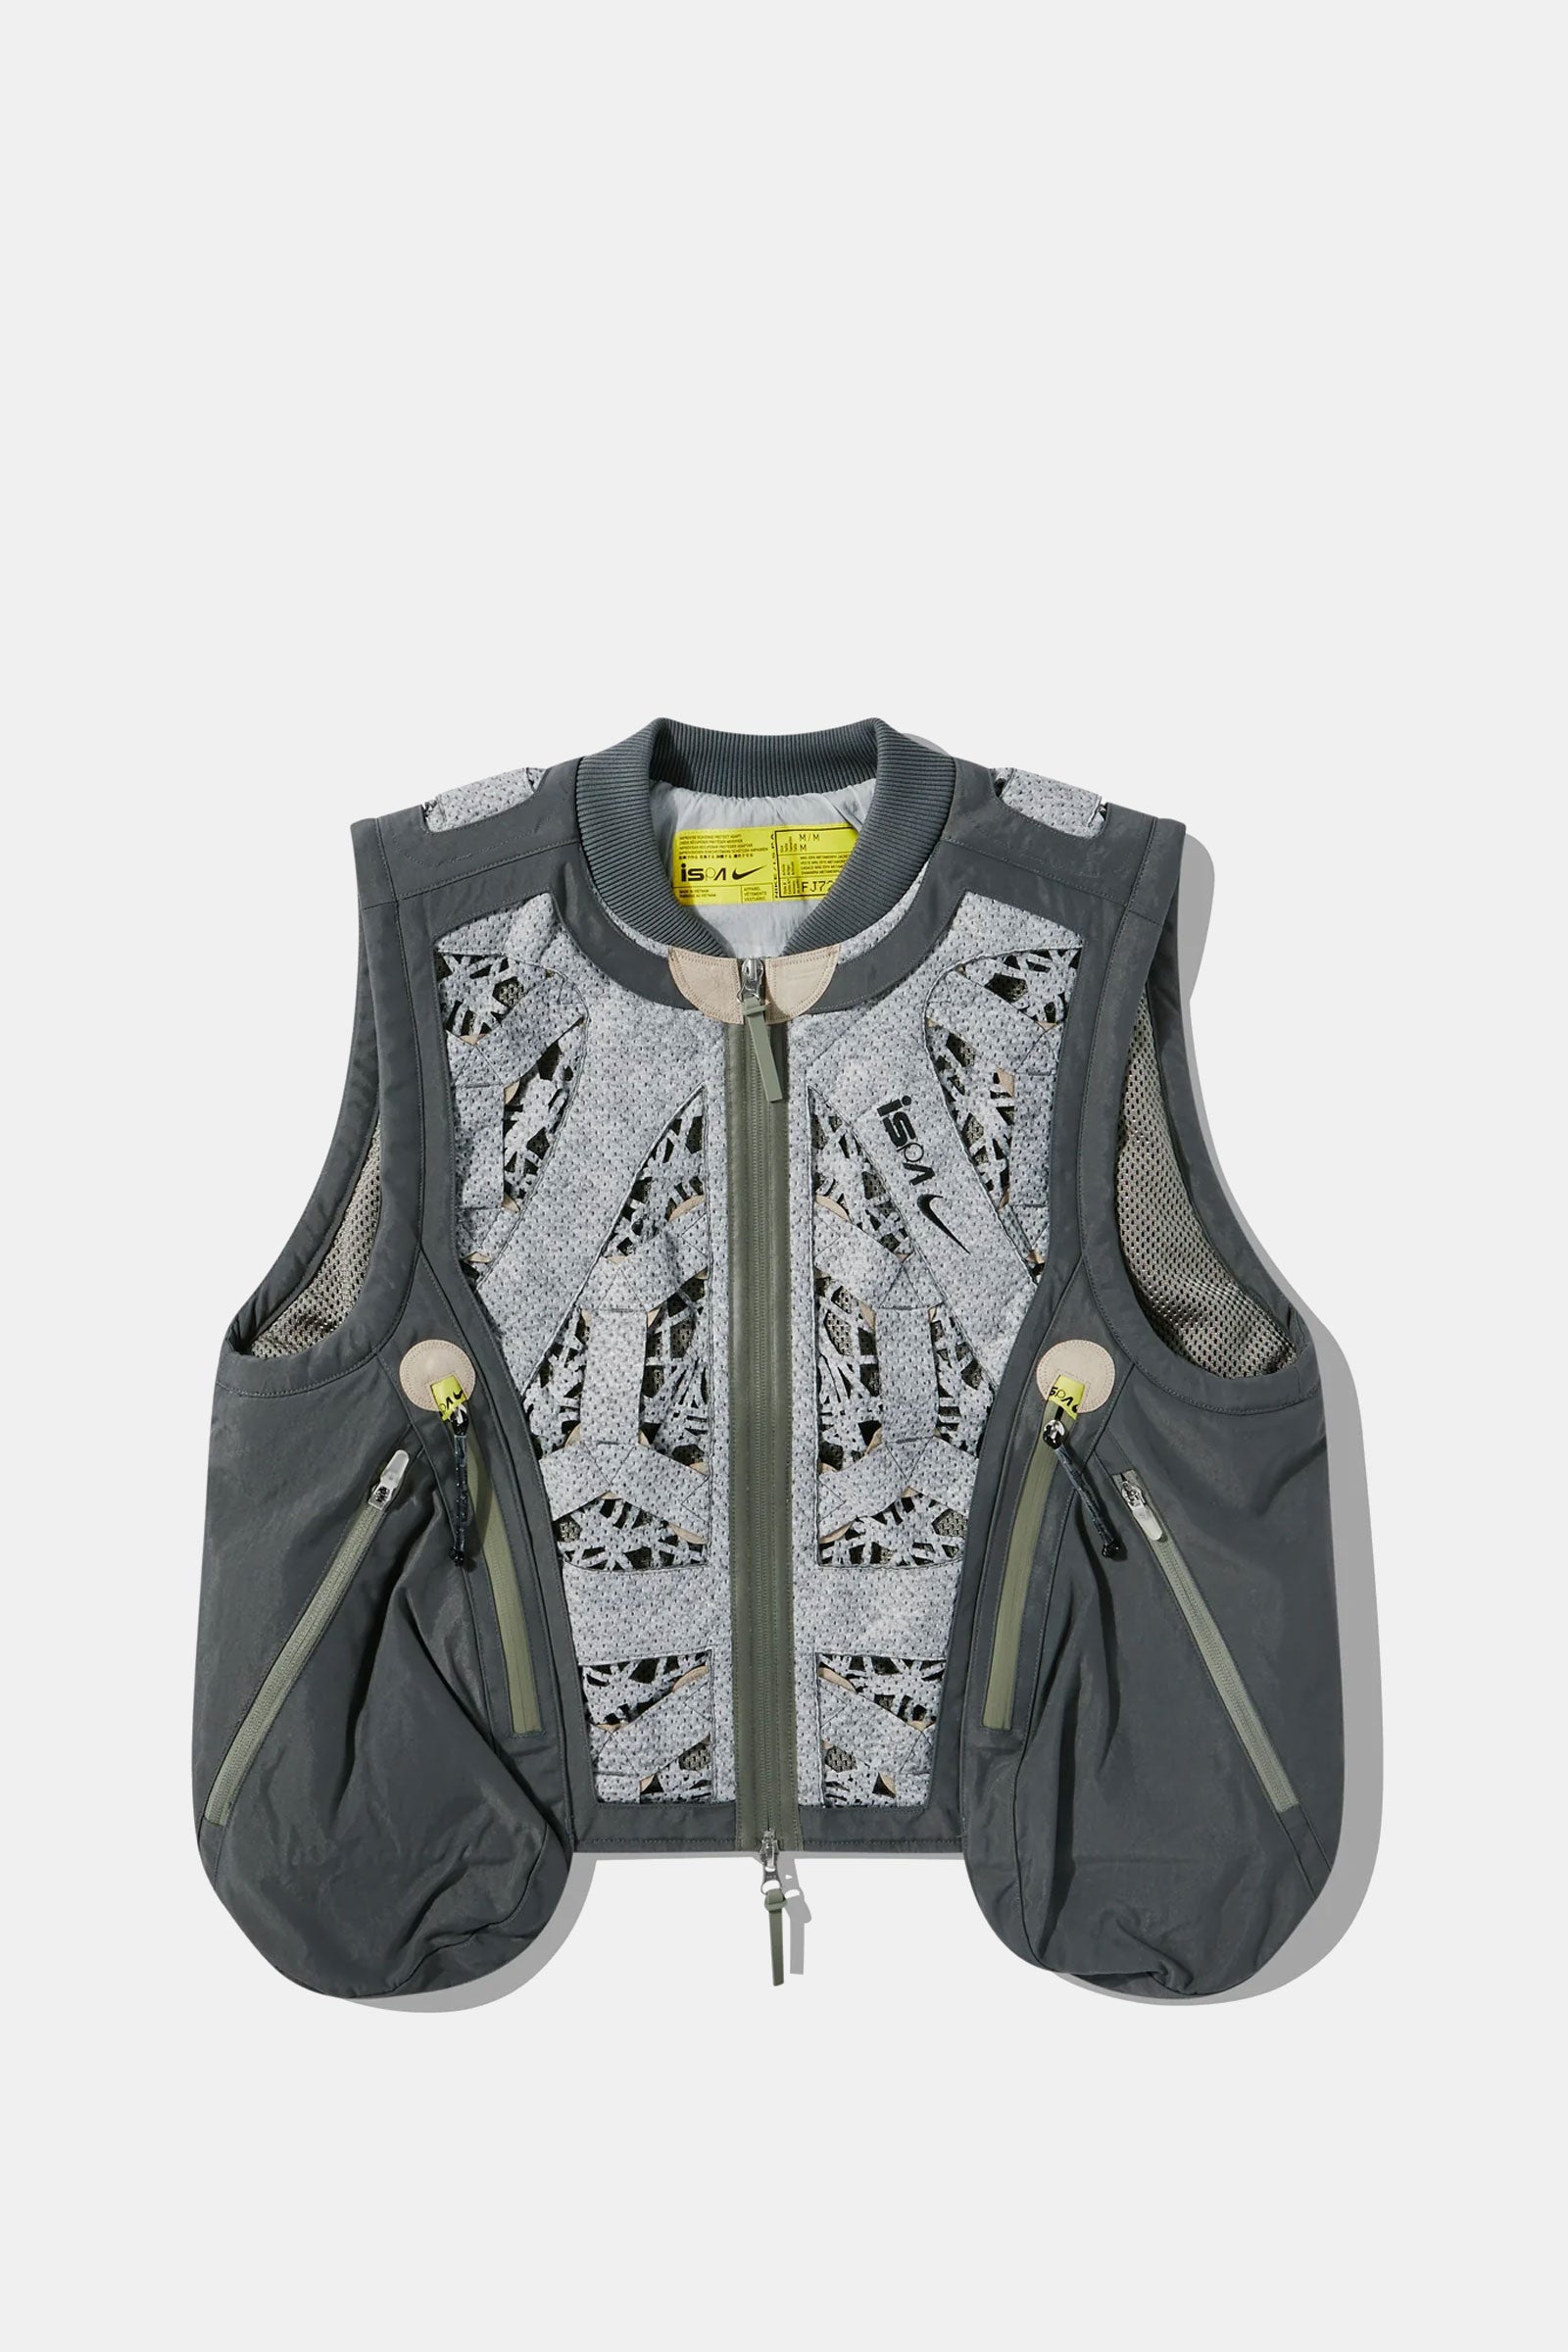 Nike ISPA Metamorph Jacket